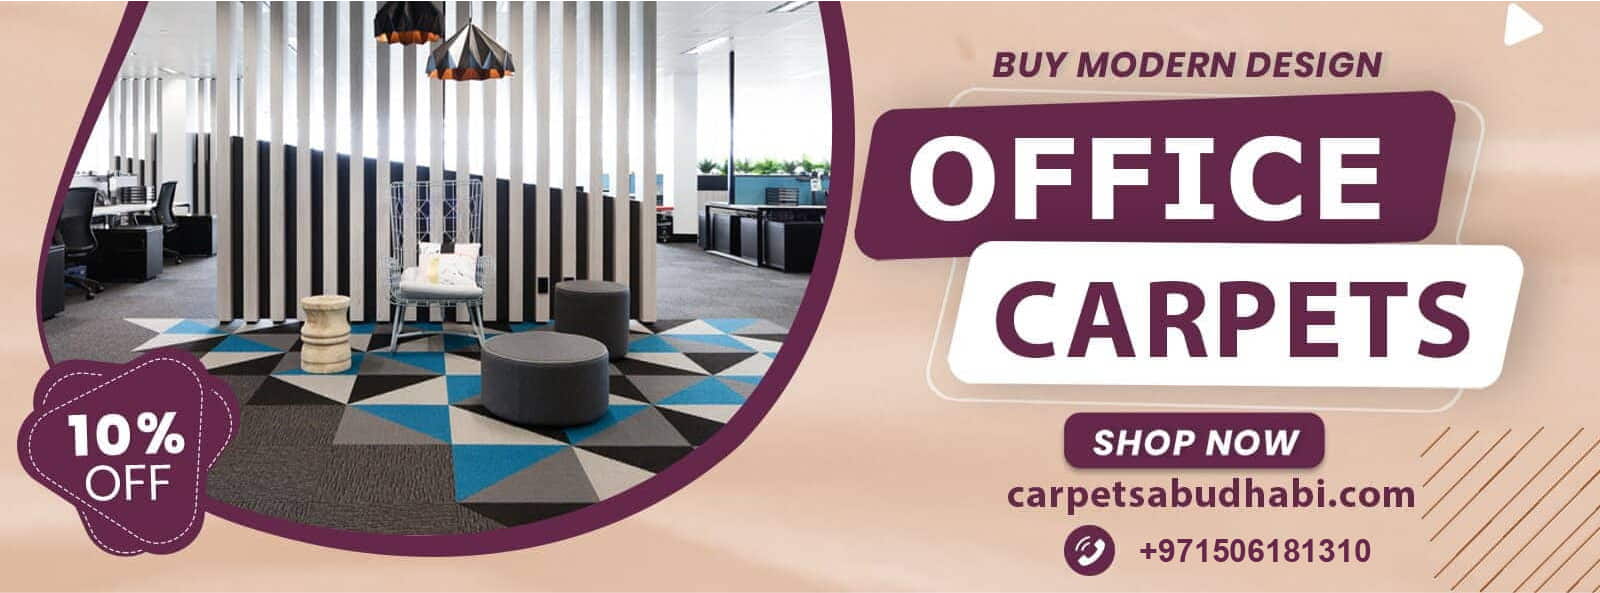 office carpets 1